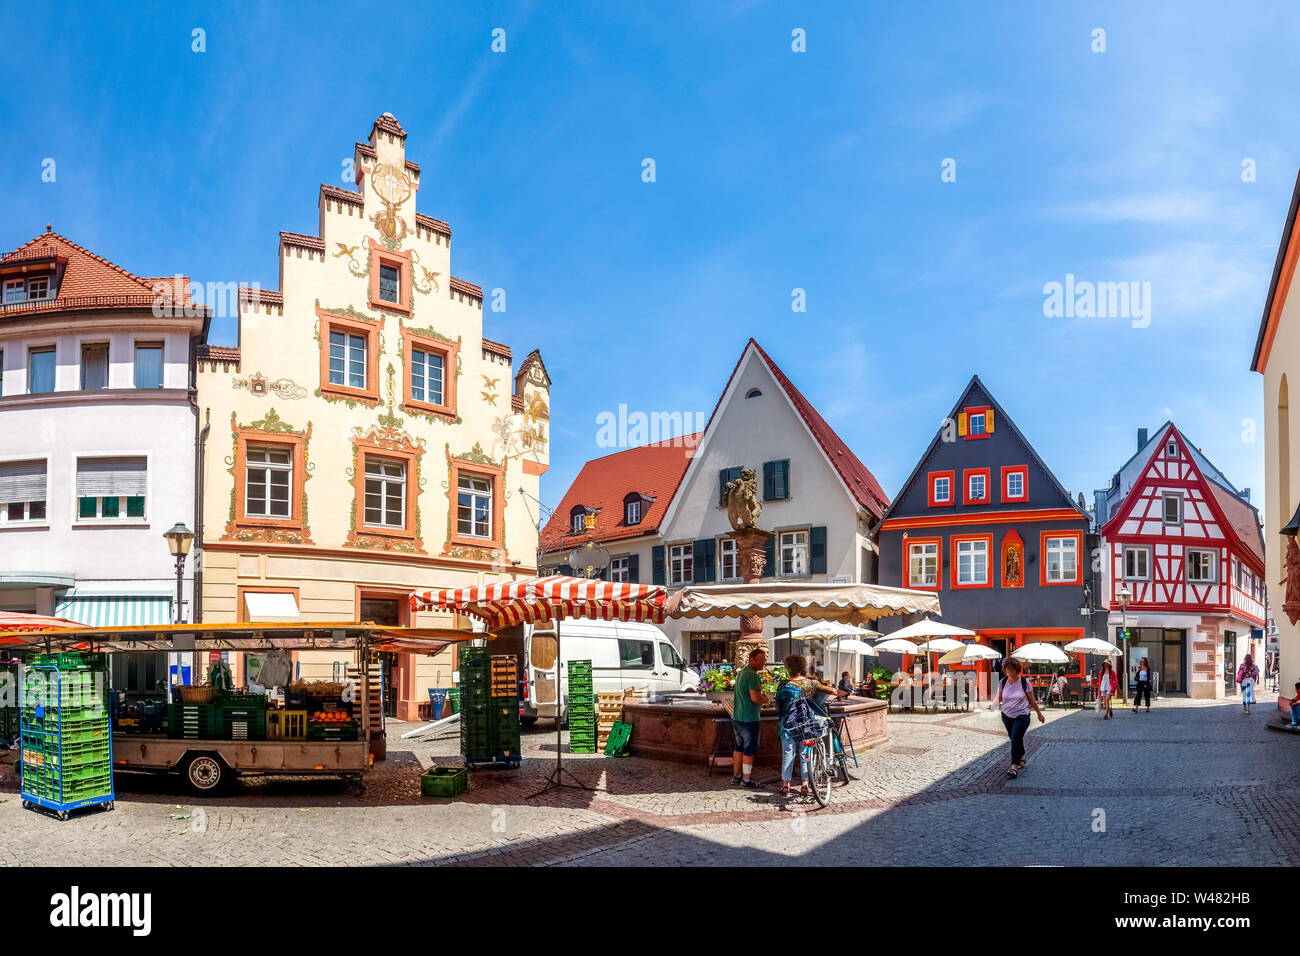 Historical City of Offenburg, Germany Stock Photo